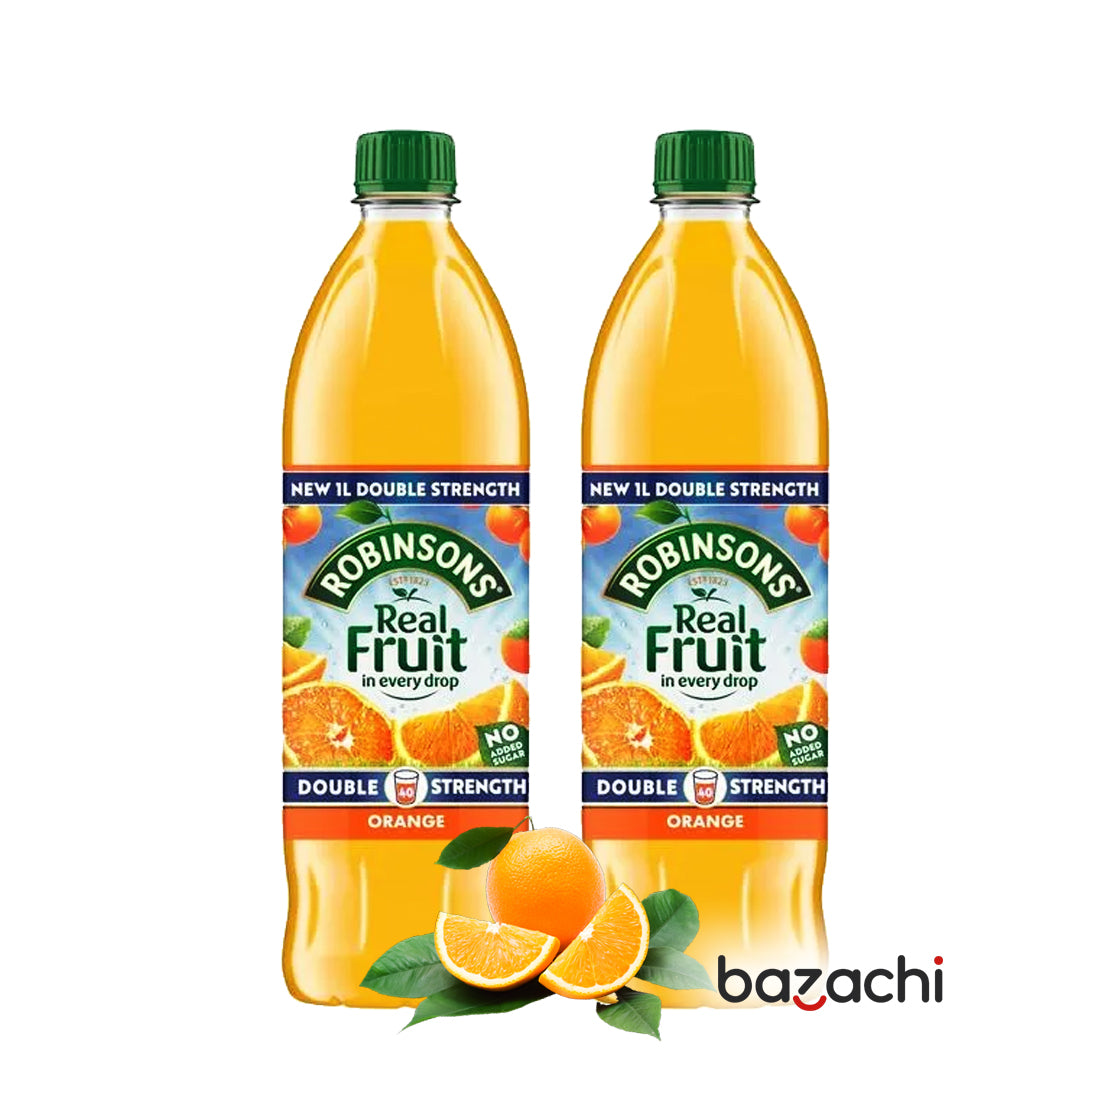 Robinsons Real Fruit Double Strength Orange Squash Juice 1.75L